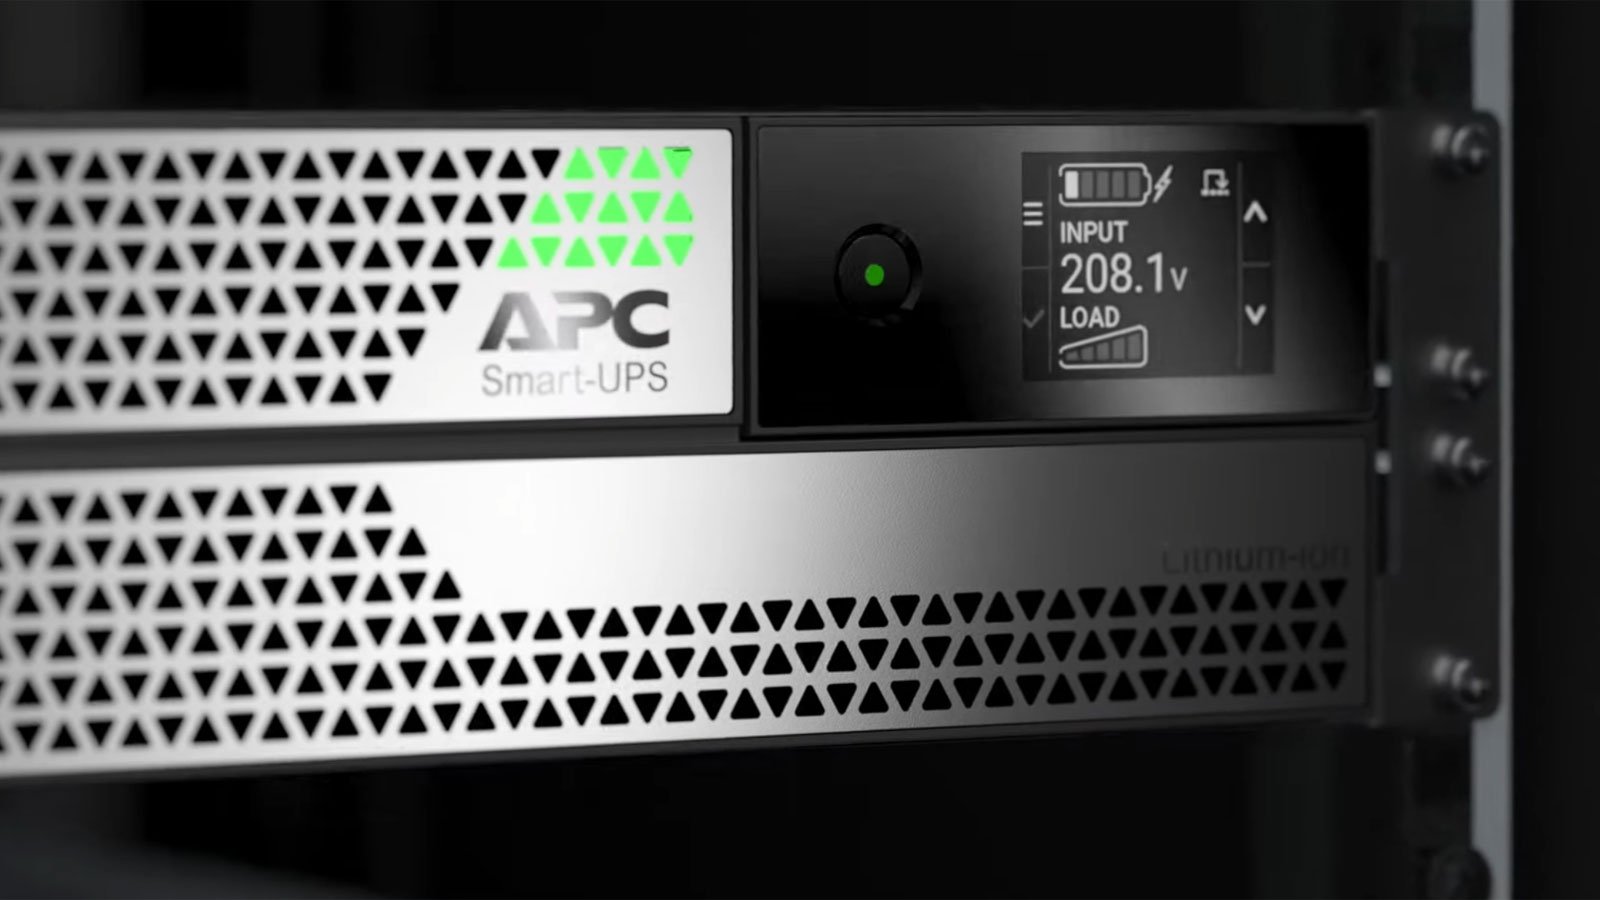 APC UPS in a server rack